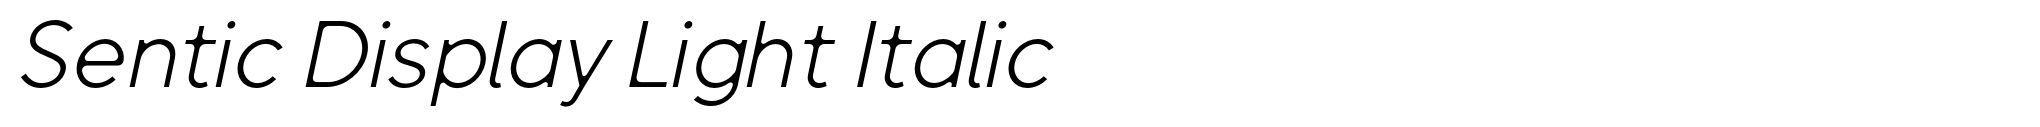 Sentic Display Light Italic image